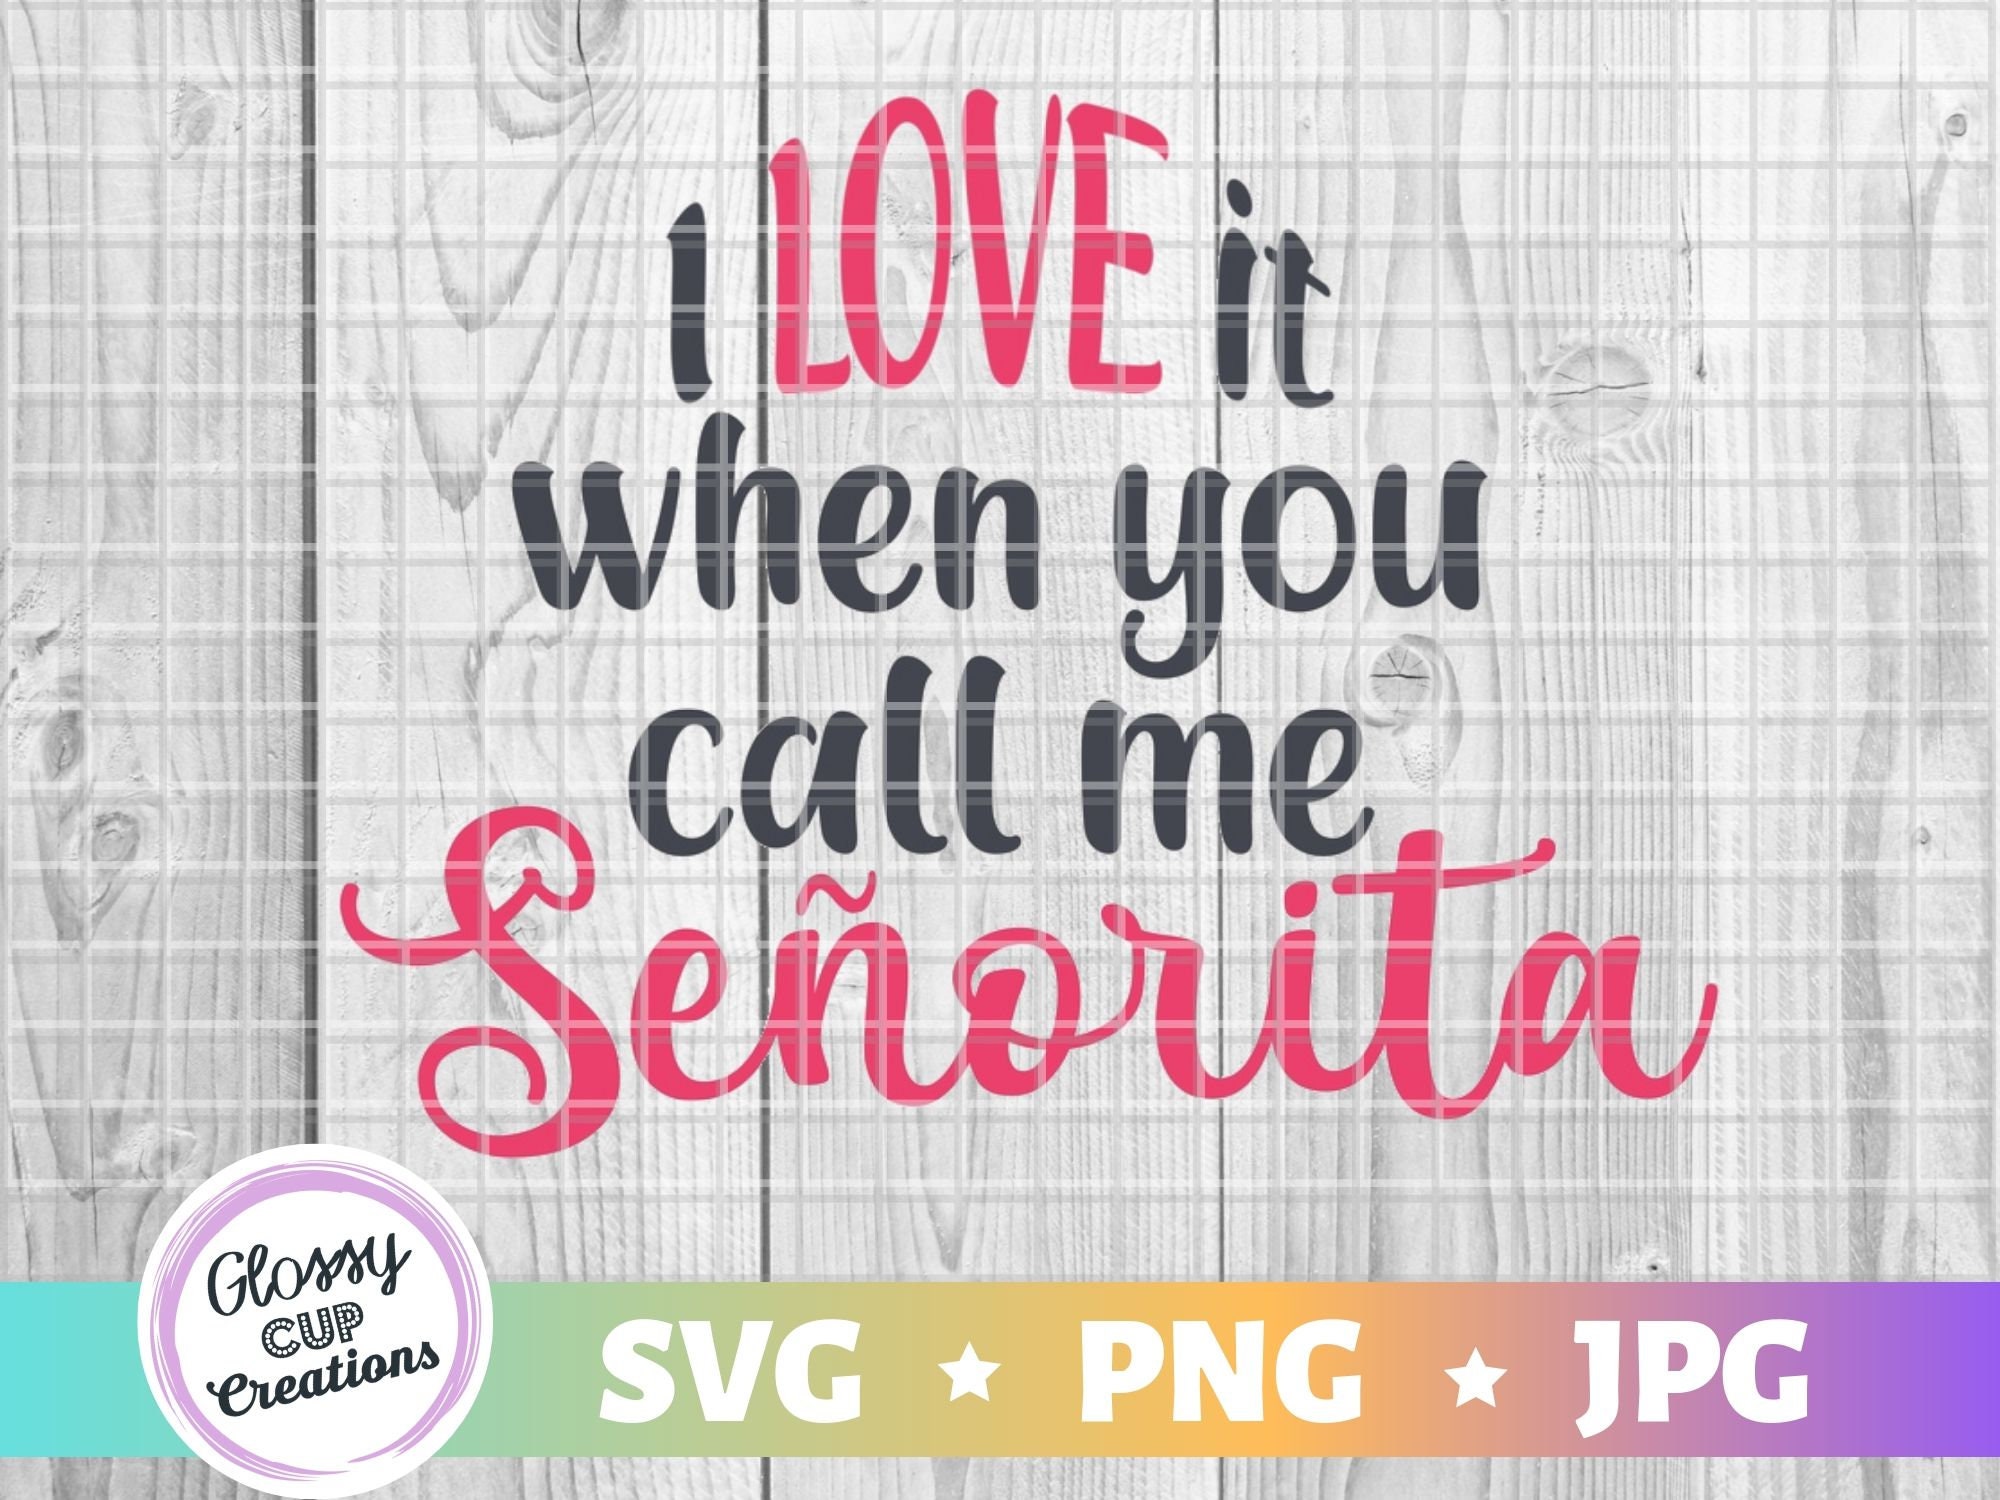 I Love It When You Call Me Senorita Senorita SVG PNG Thick image picture